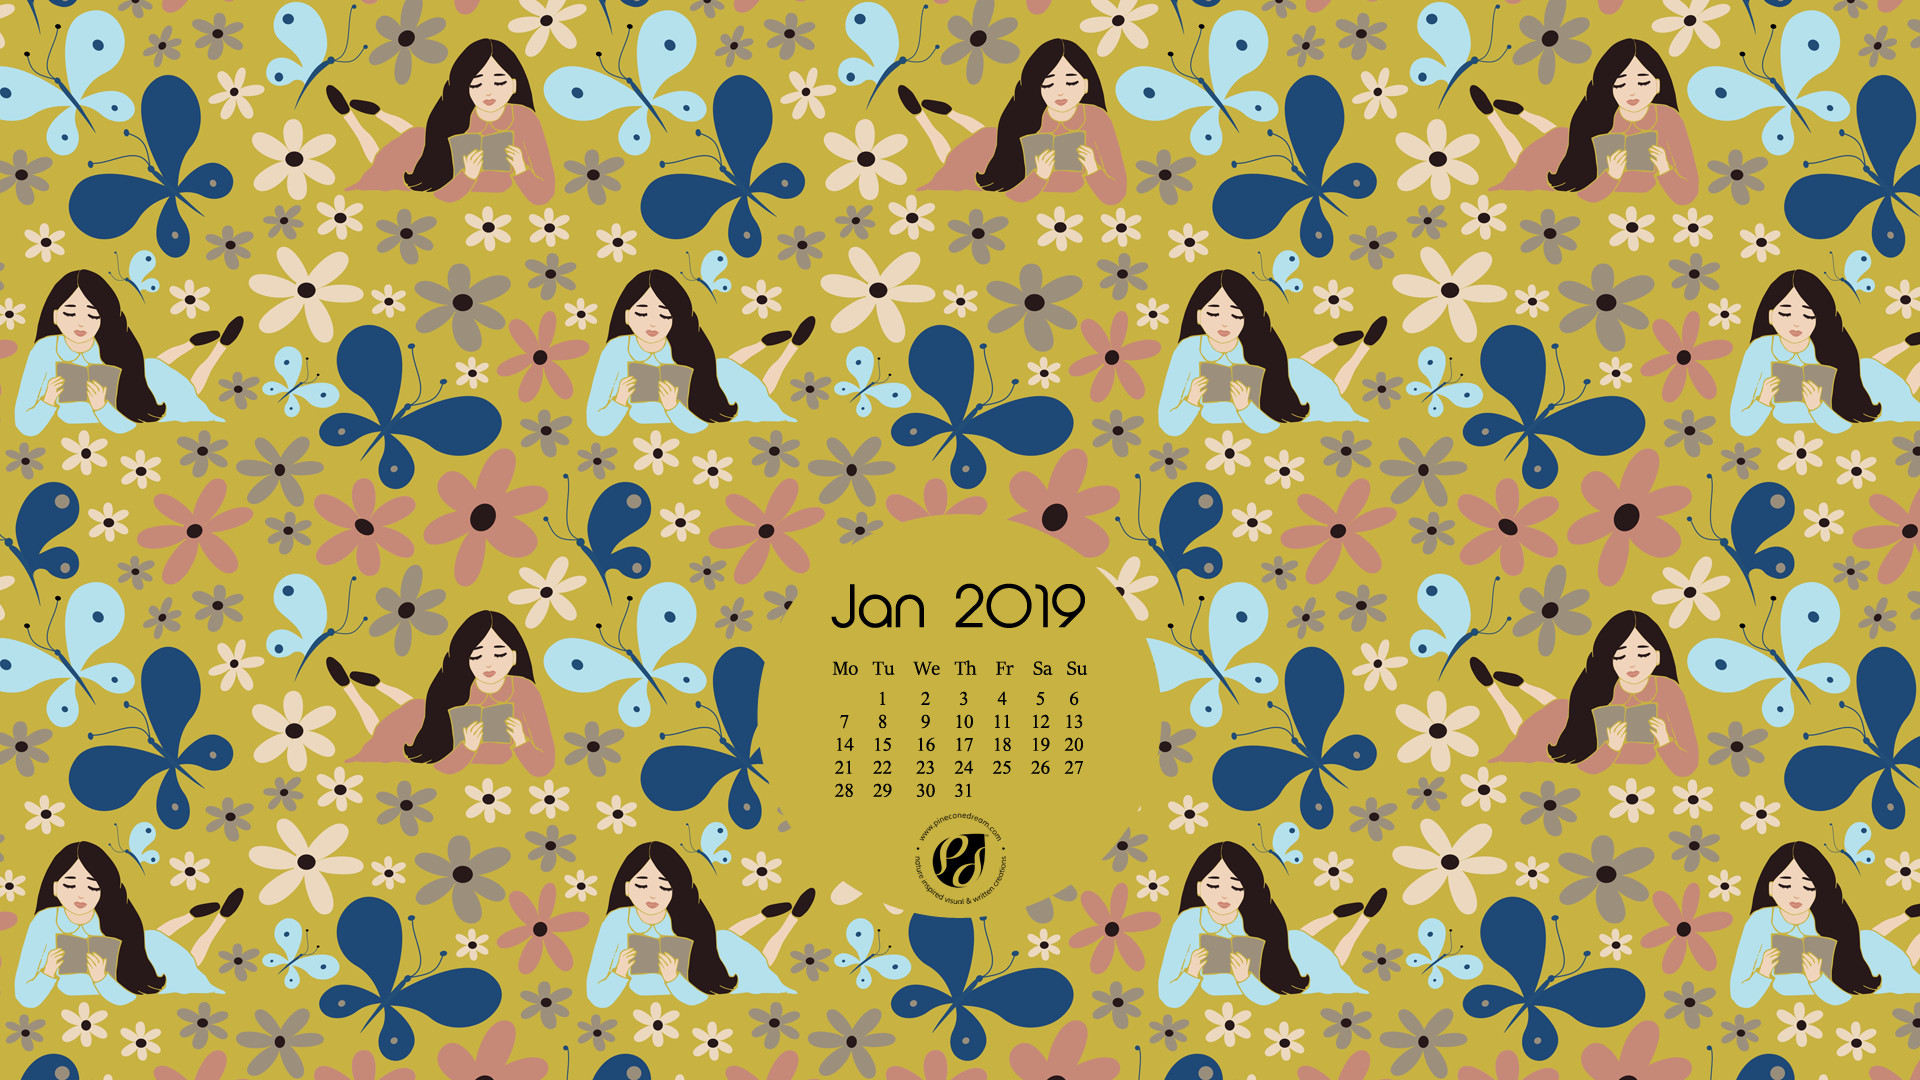 1920x1080 Jan 2019 desktop calendar wallpaper| January 2019 wallpapers | Jan 2019  backgrounds | January 2019 printable planner | butterflies & flowers iPhone  ...